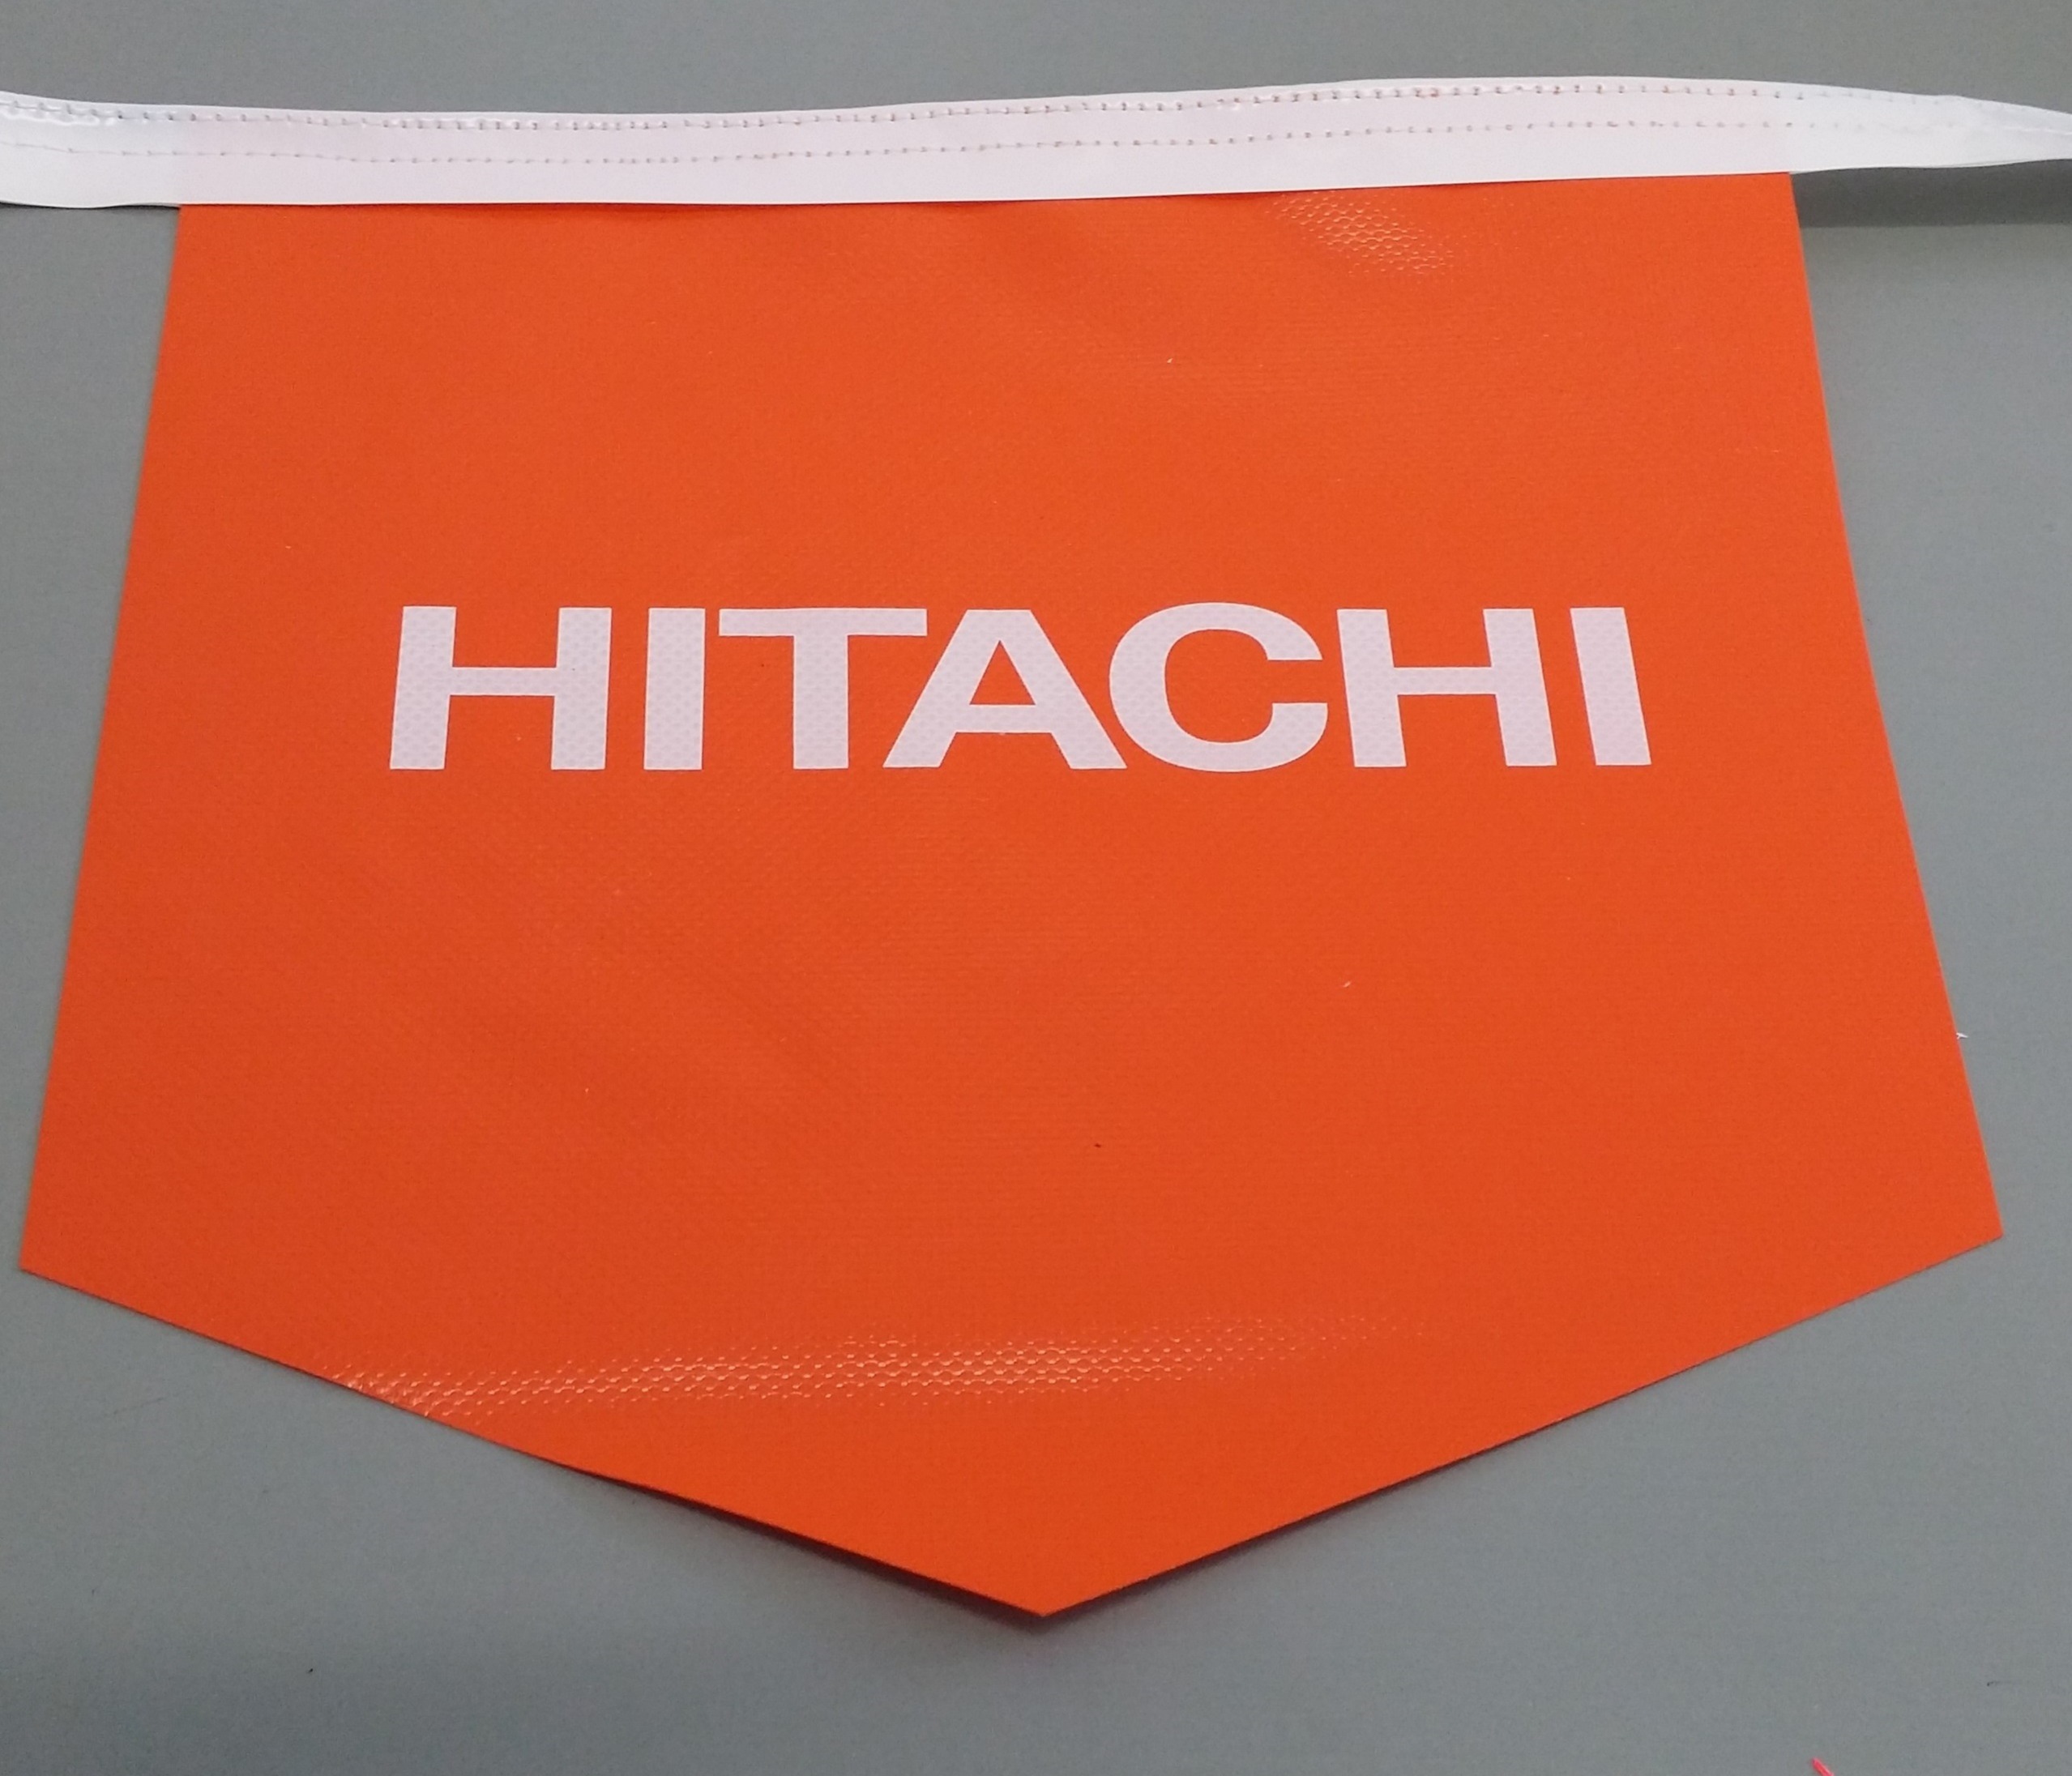 Hitachi Promotion